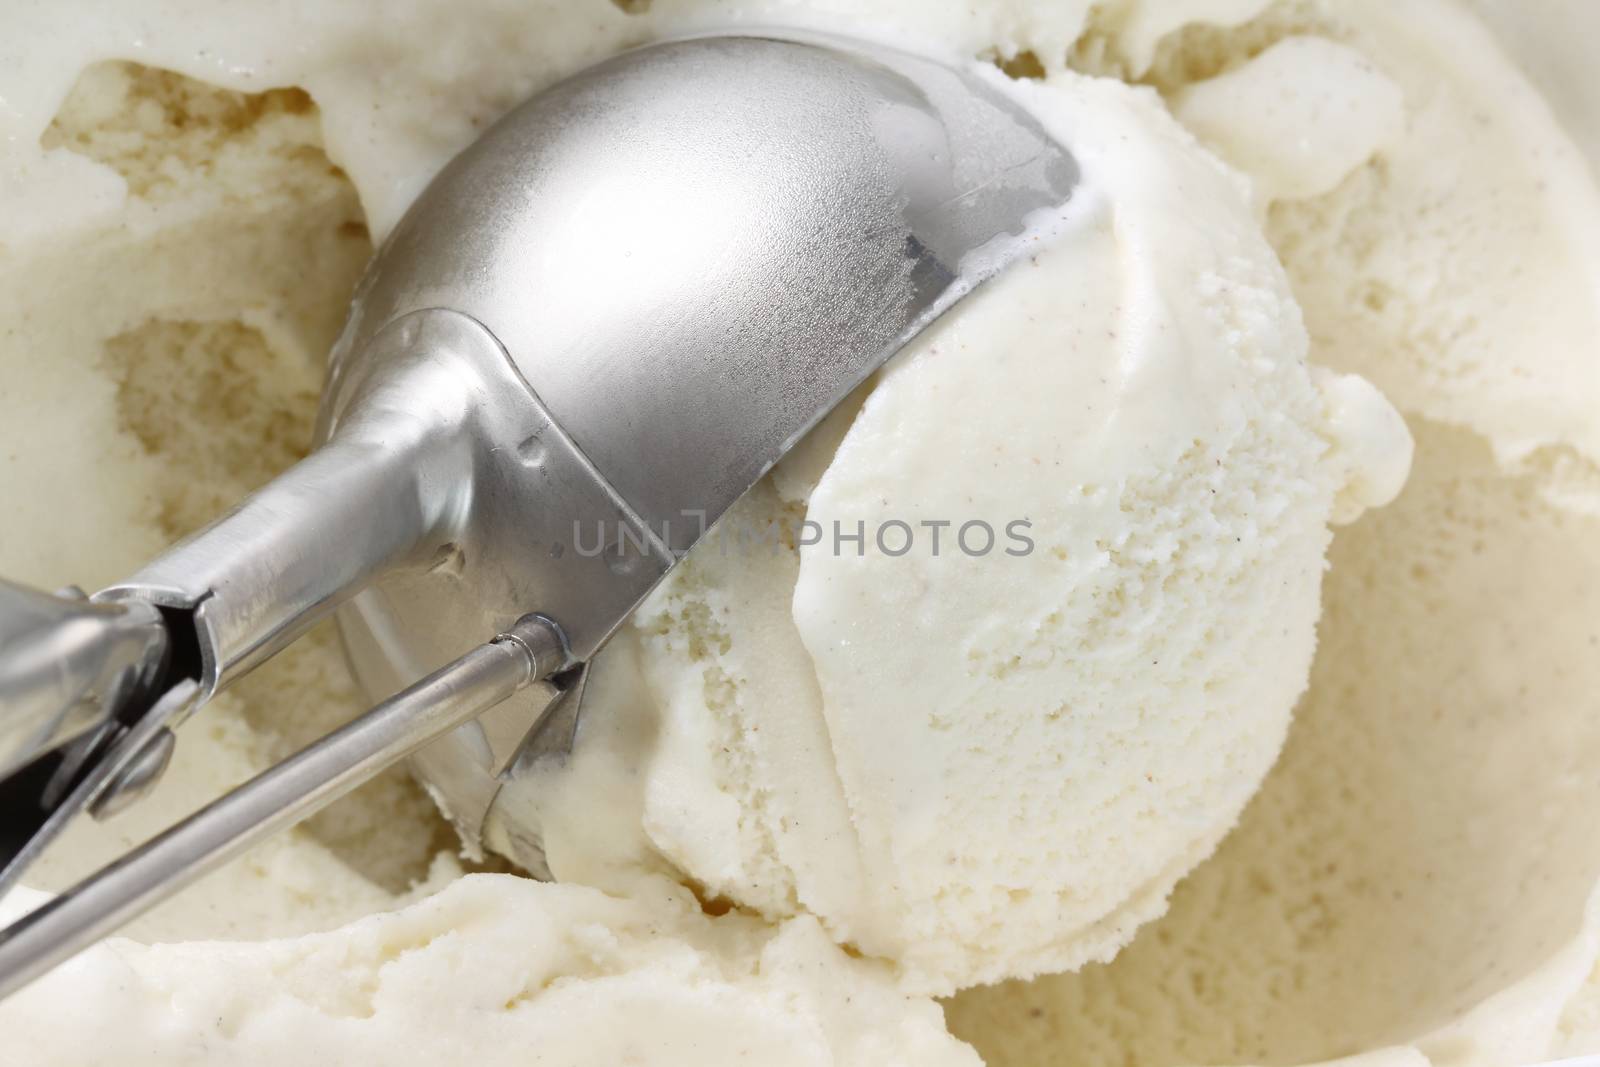 Scoop of vanilla bean ice cream from container